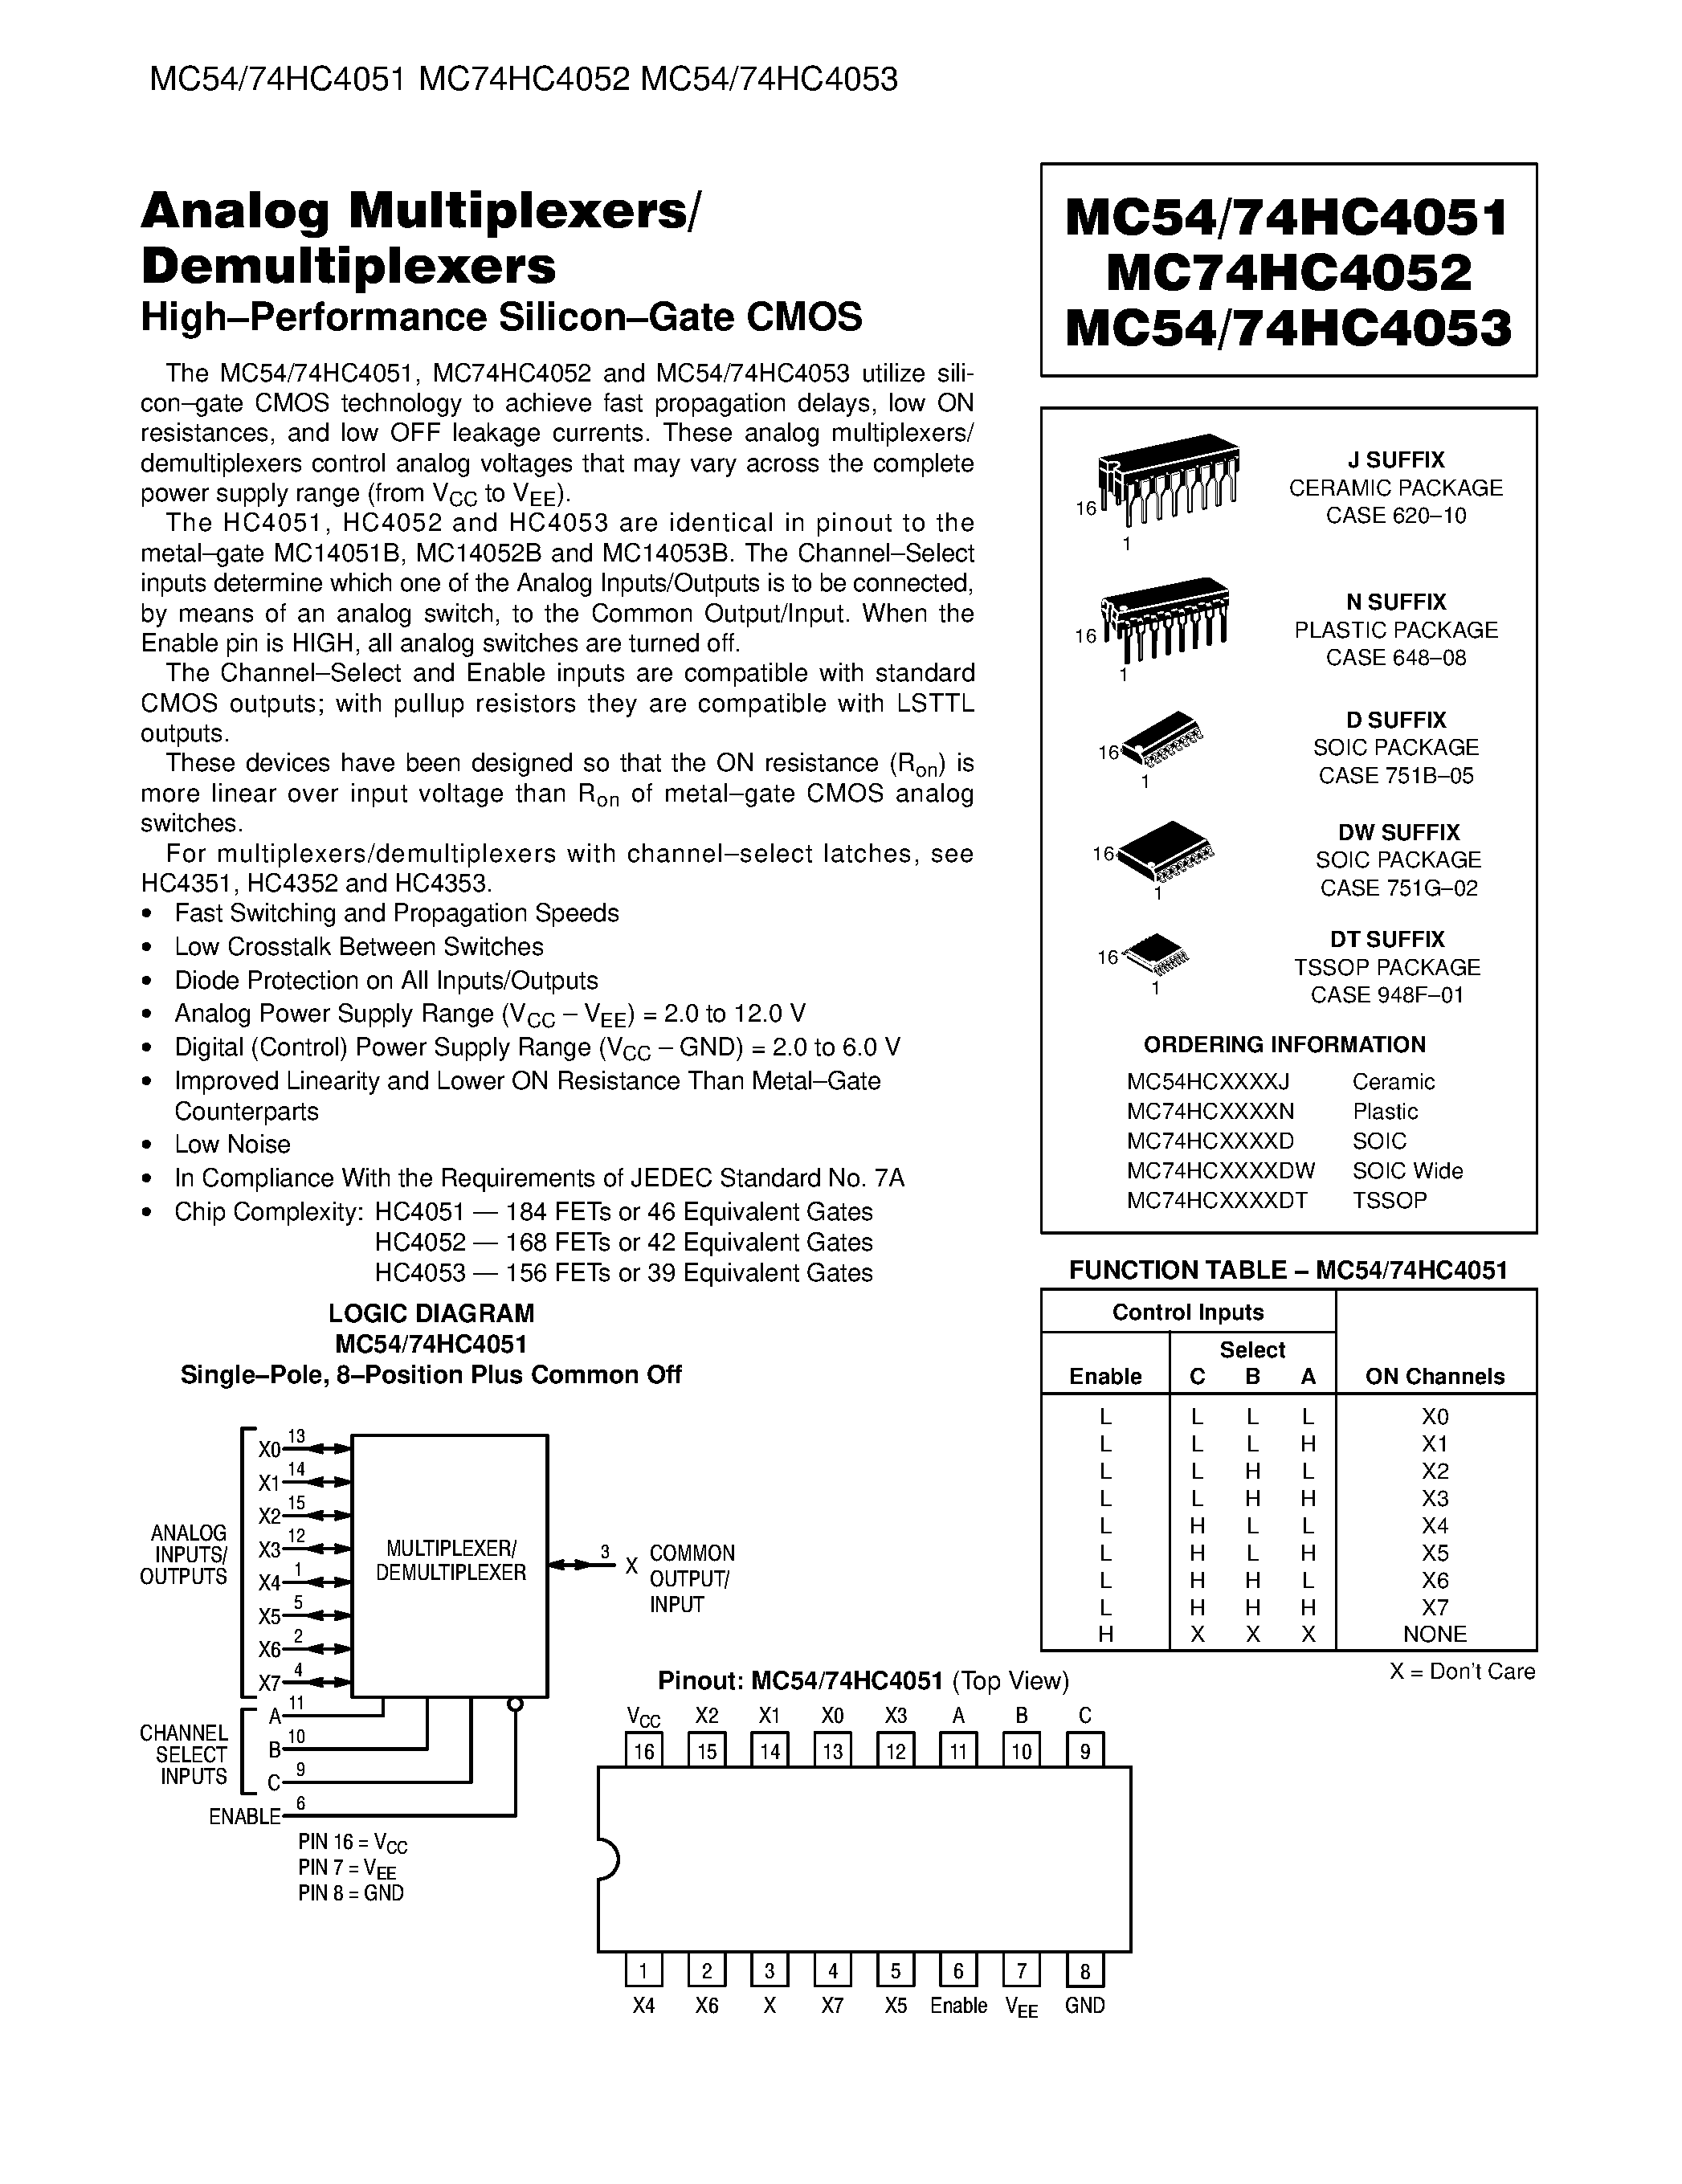 Datasheet MC74HC4051 - (MC74HC4051 - MC74HC4053) Analog Multiplexers/Demultiplexers page 2